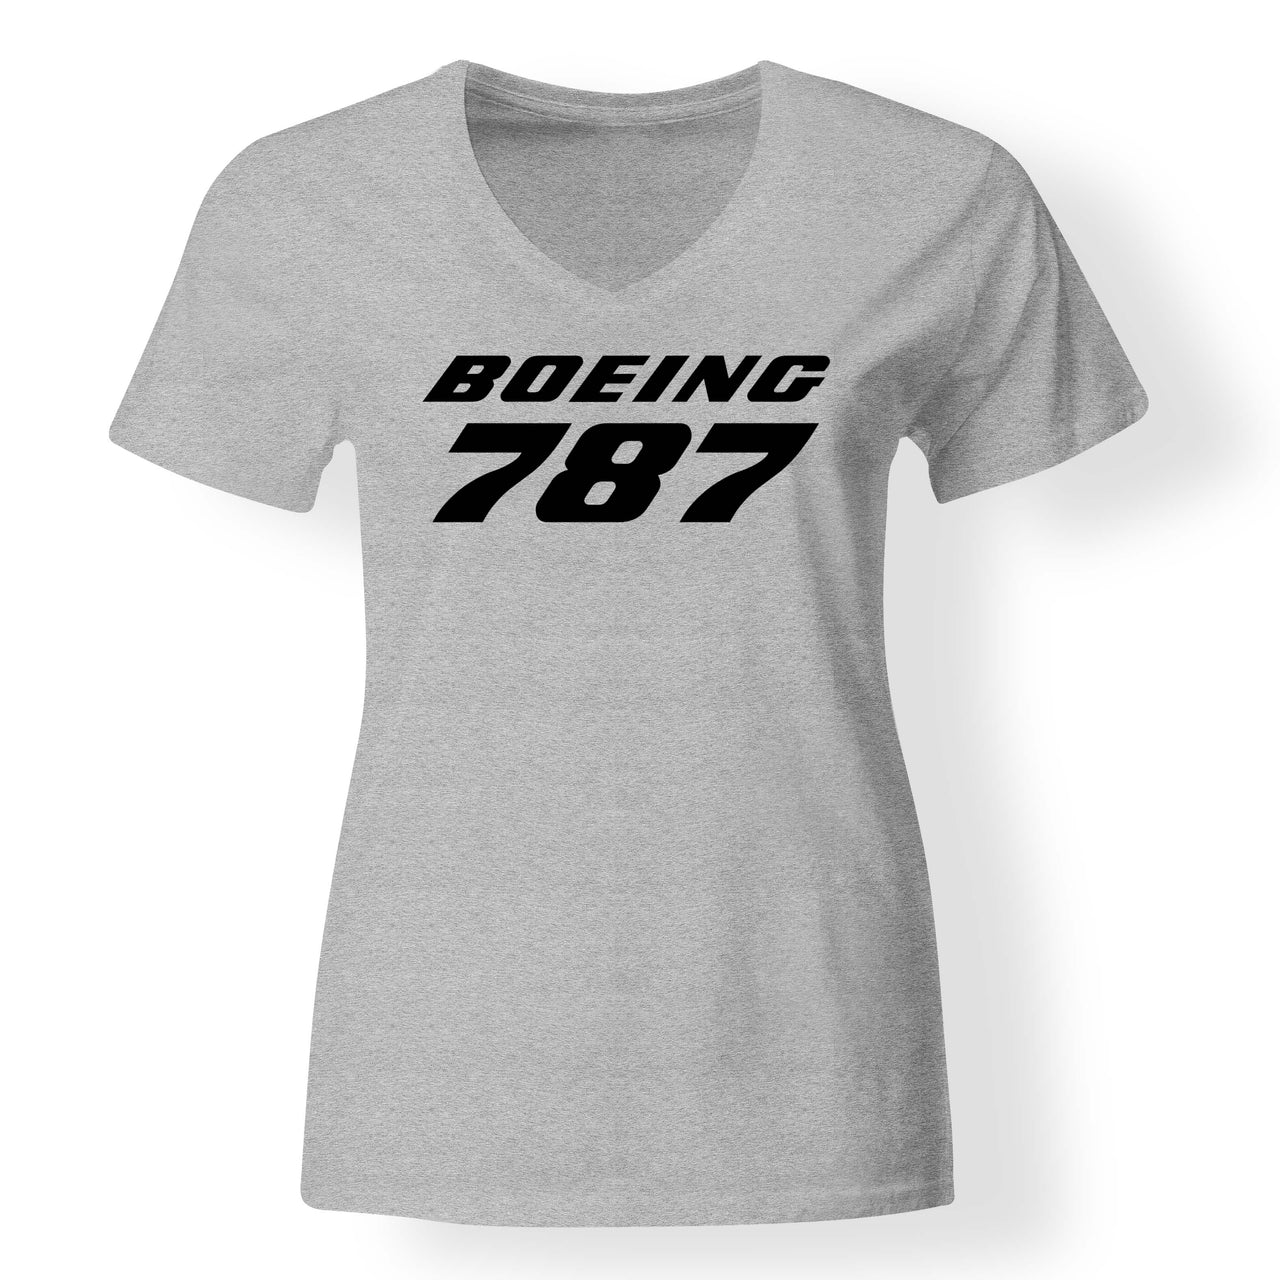 Boeing 787 & Text Designed V-Neck T-Shirts